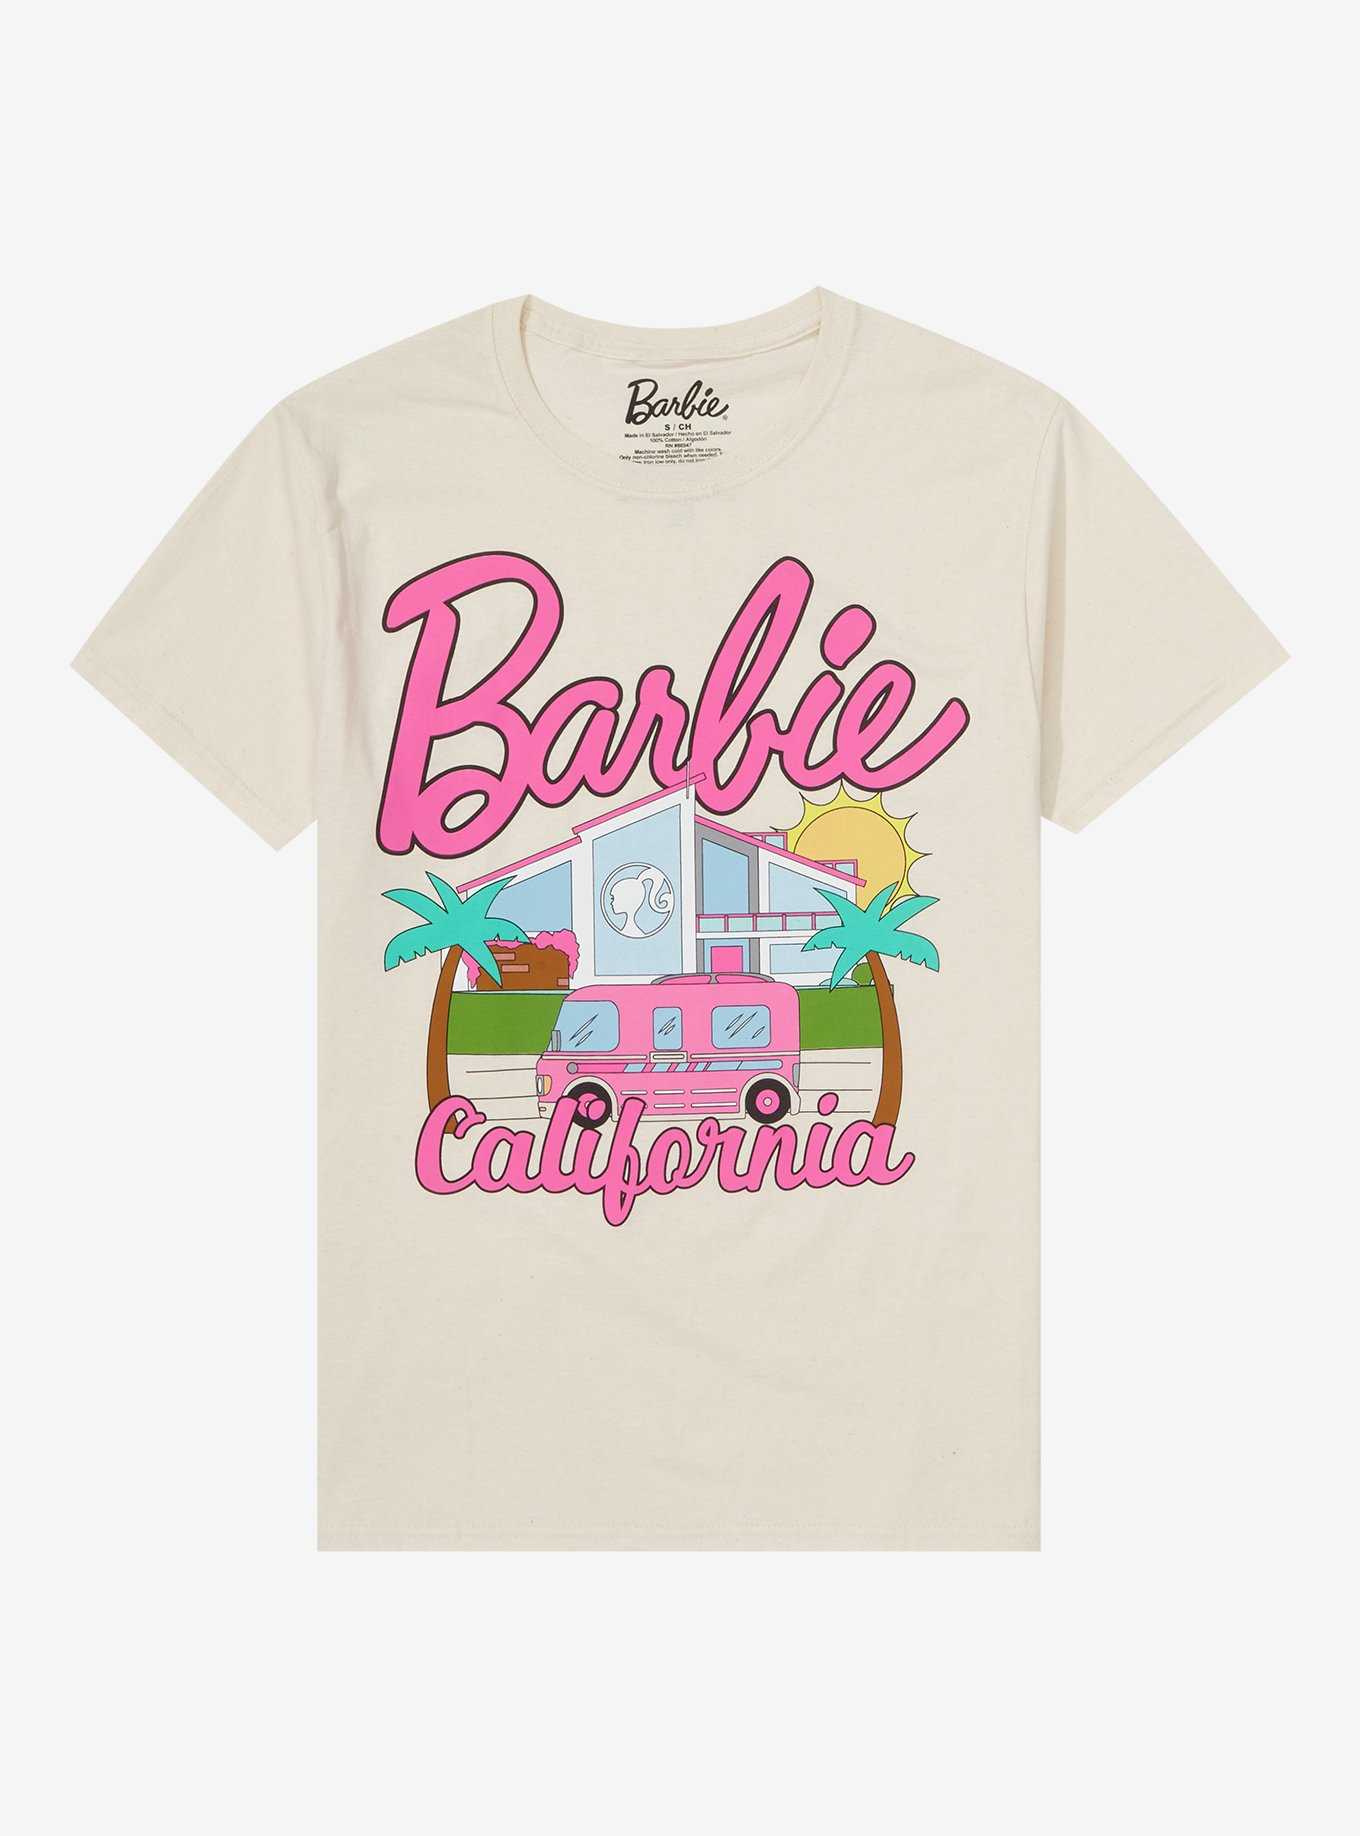 OFFICIAL Barbie Shirts & Merch